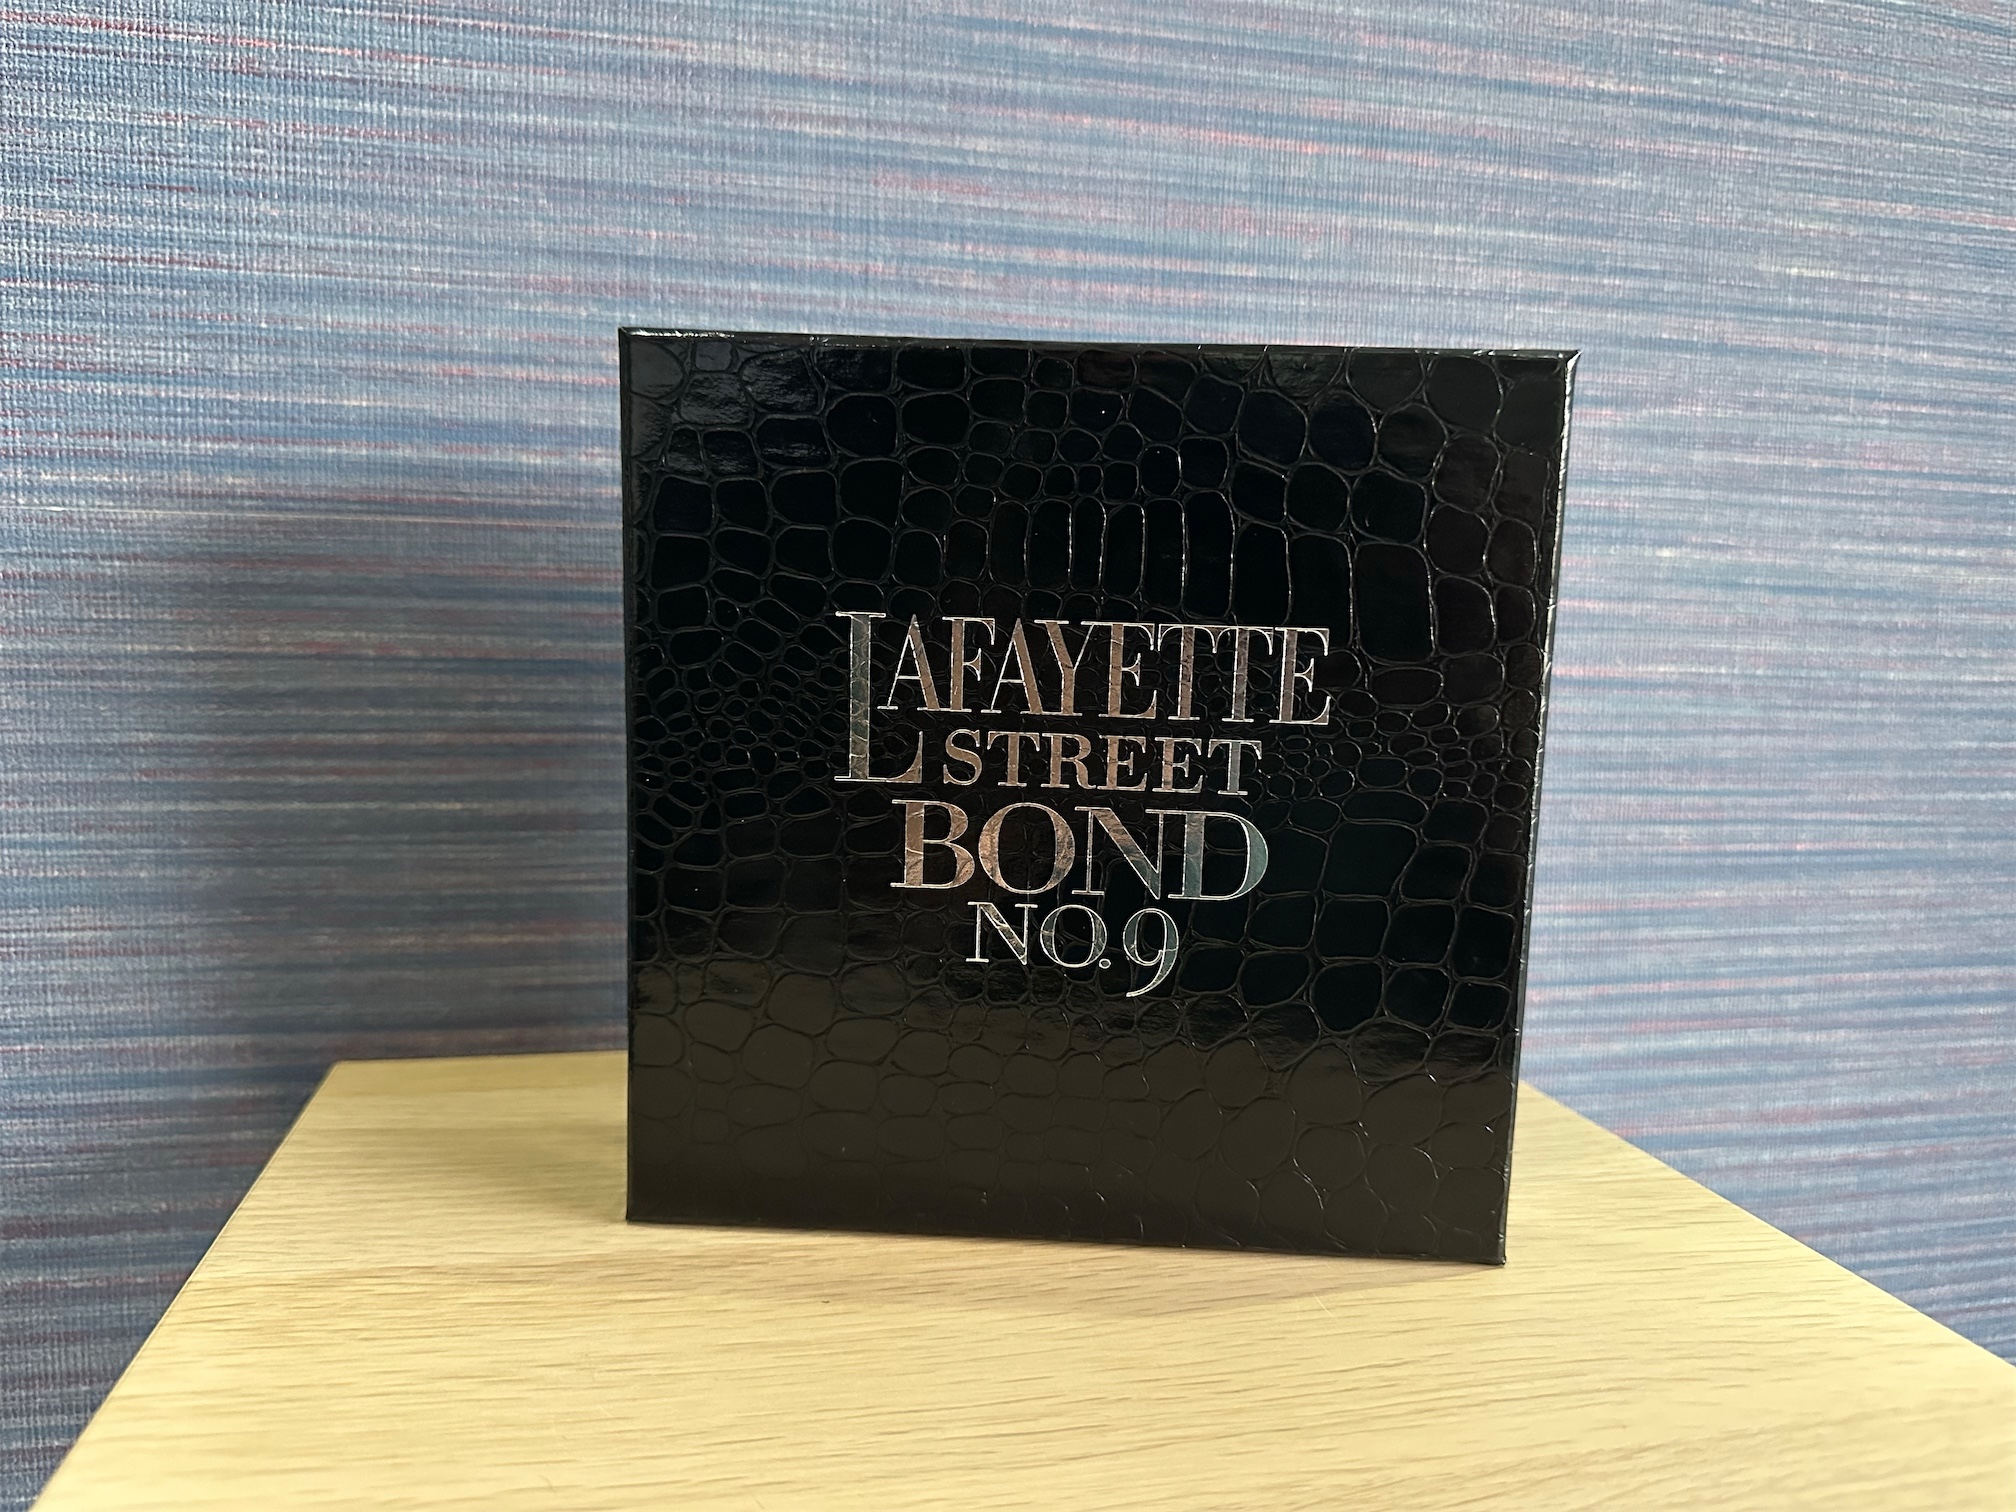 joyas, relojes y accesorios - Vendo Perfume Bond No.9 LAFAYETTE STREET - Nuevo| Original RD$ 18,500 NEG